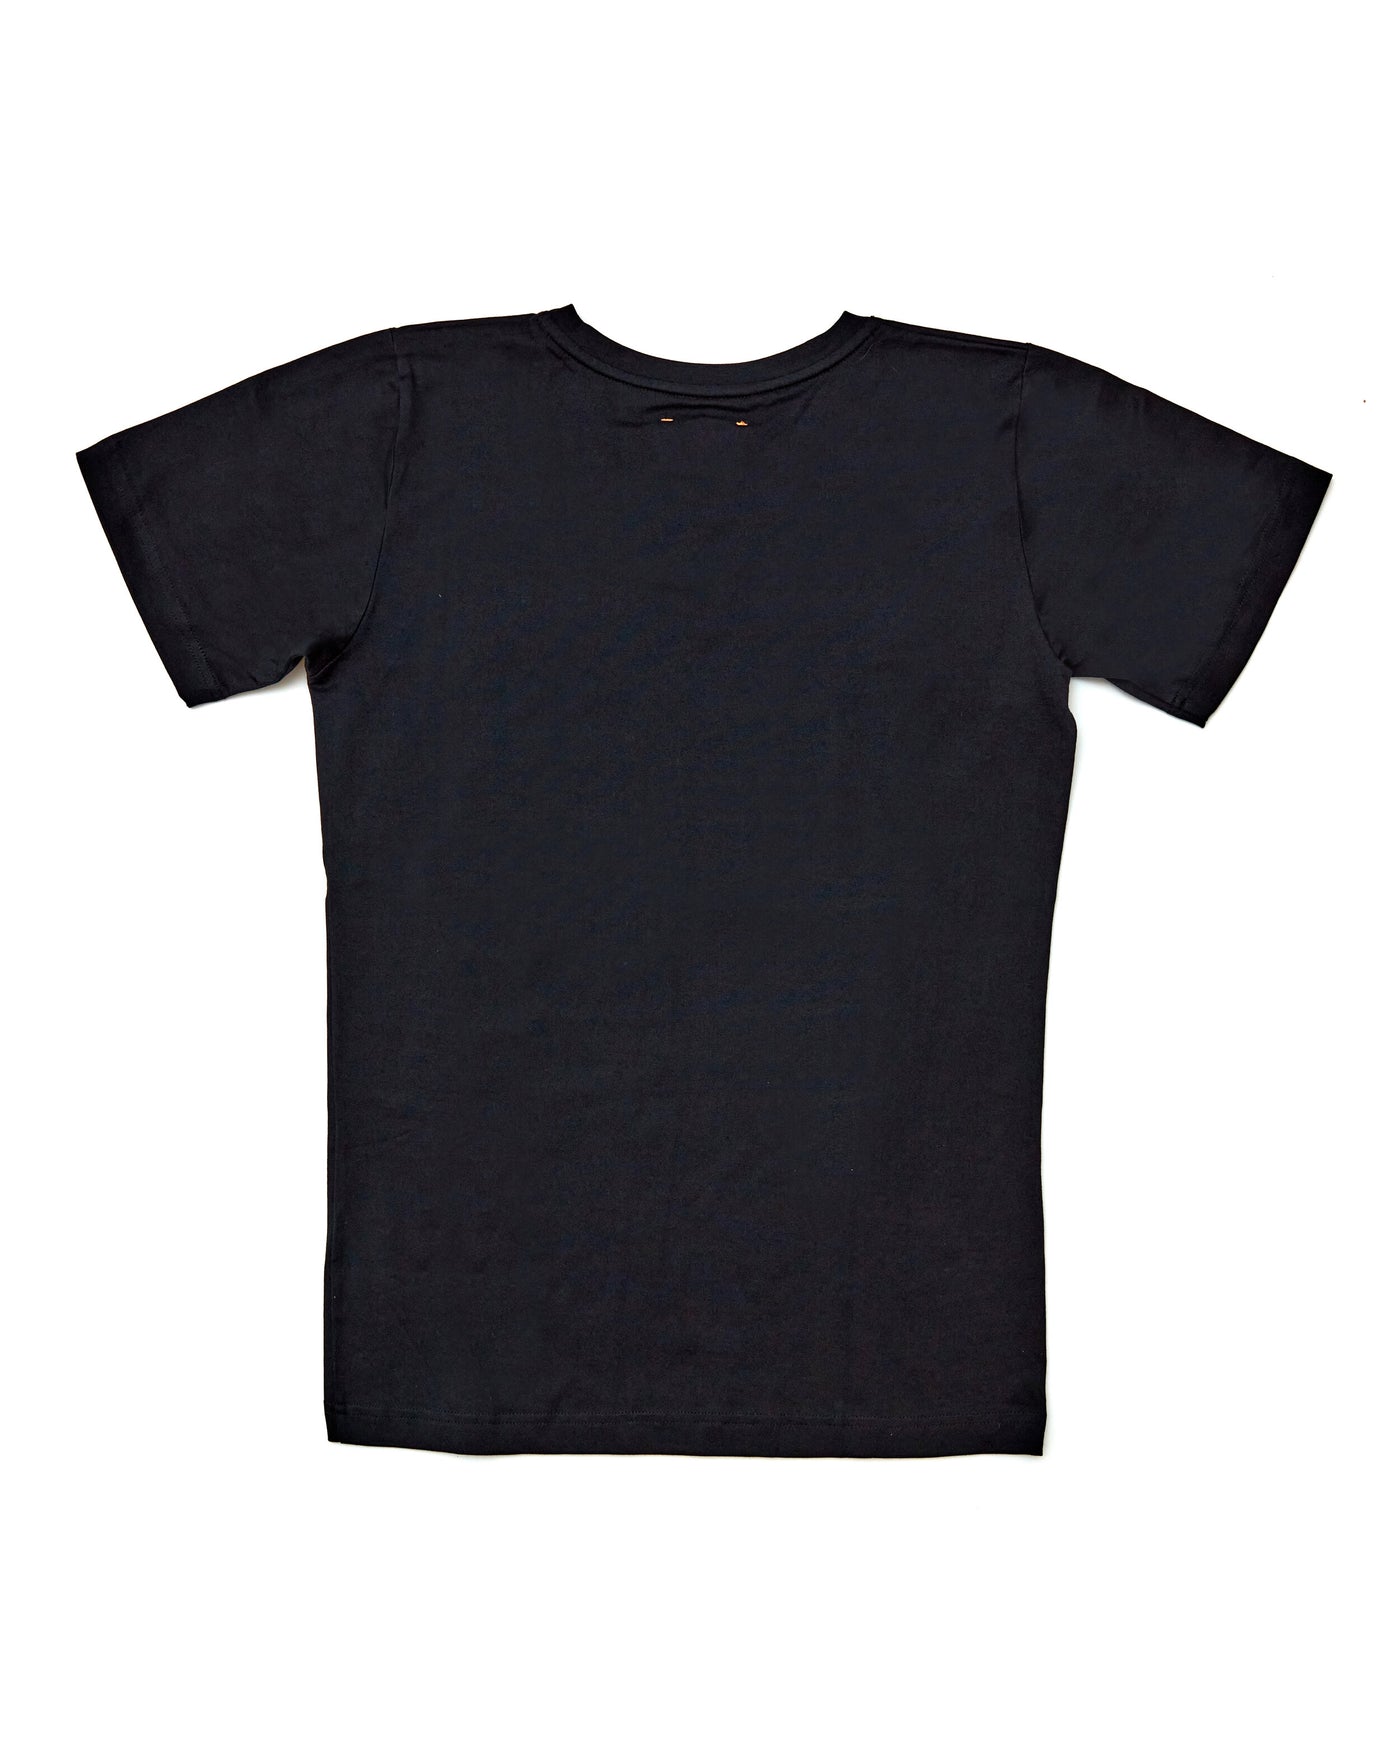 Festka x CHATTY t-shirt BLACK